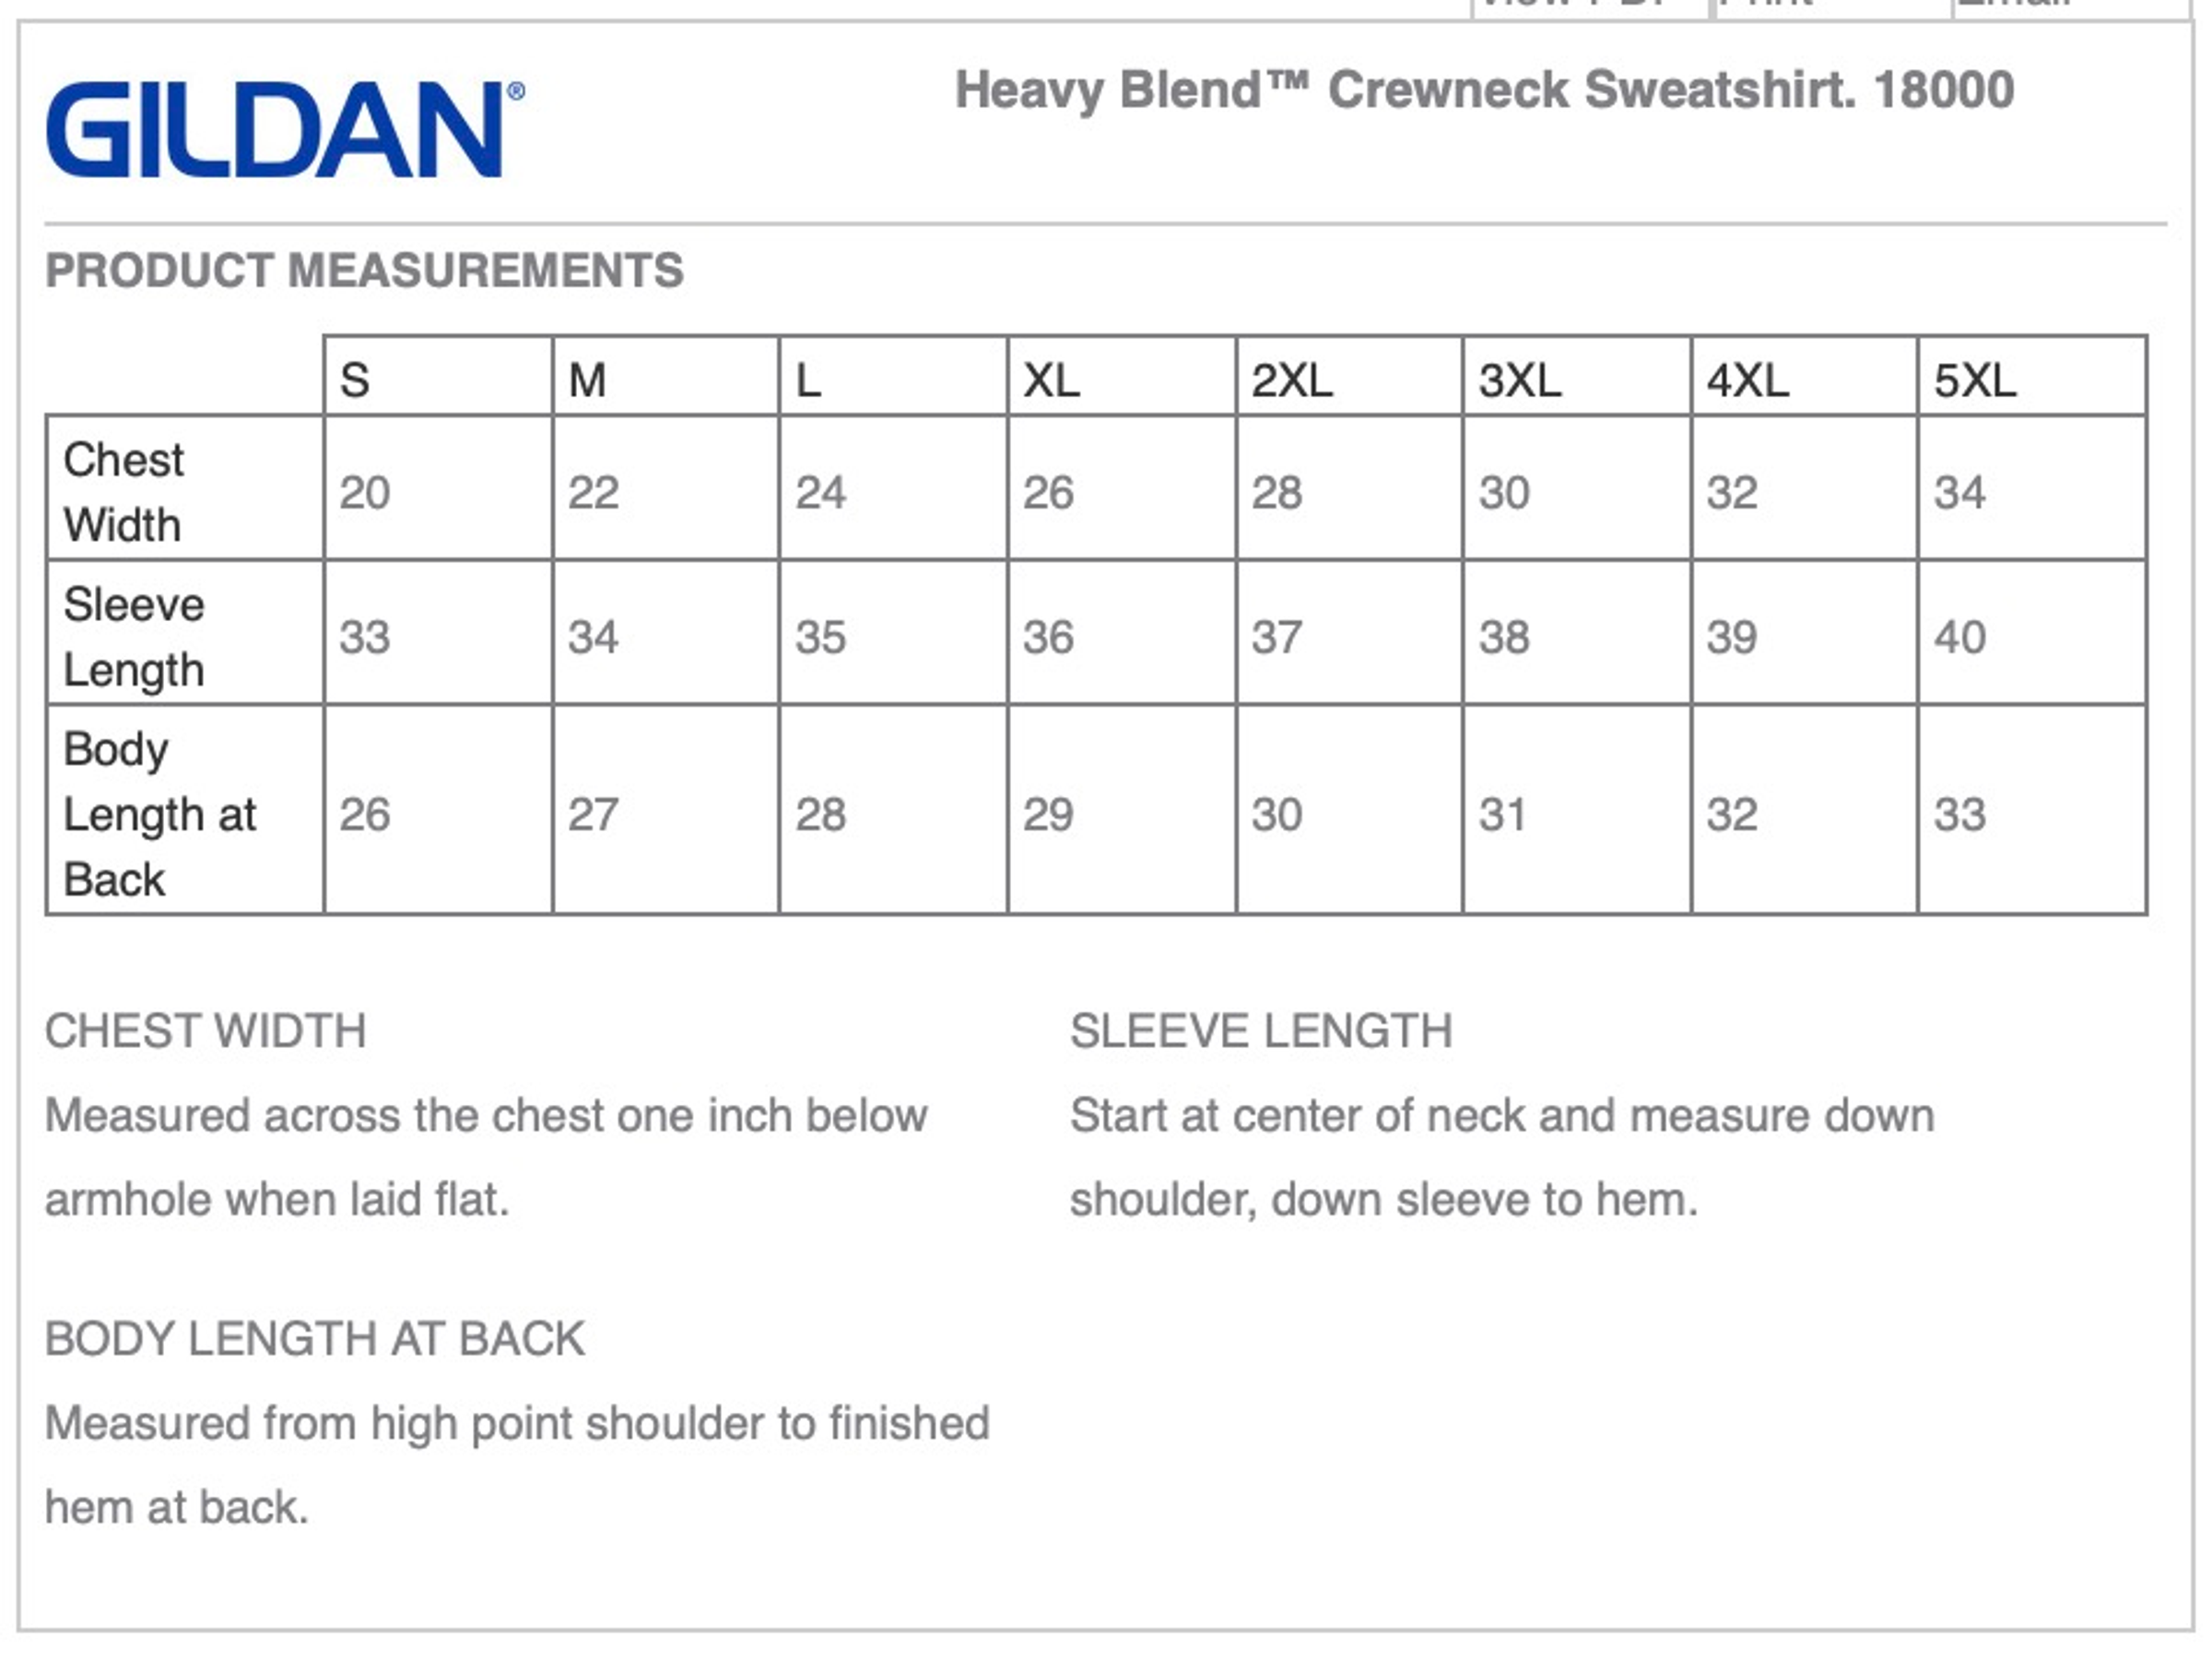 RocknRow Heavy Blend Crewneck Sweatshirt